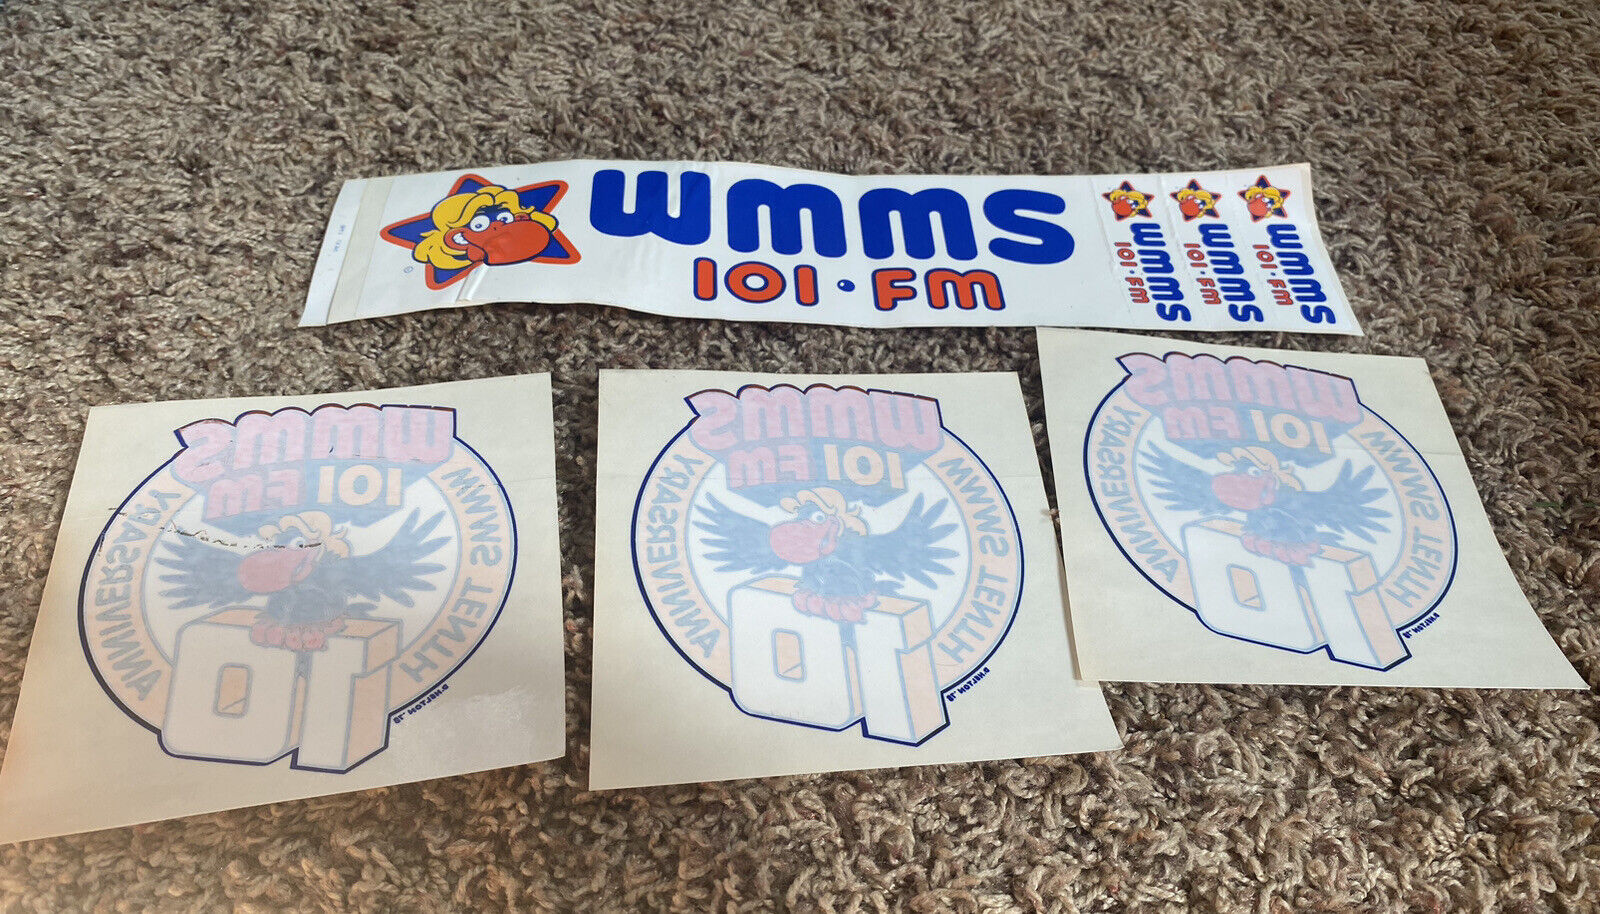 Vintage Cleveland Ohio Rock Radio WMMS 101 FM Buzzard Bumper Stickers